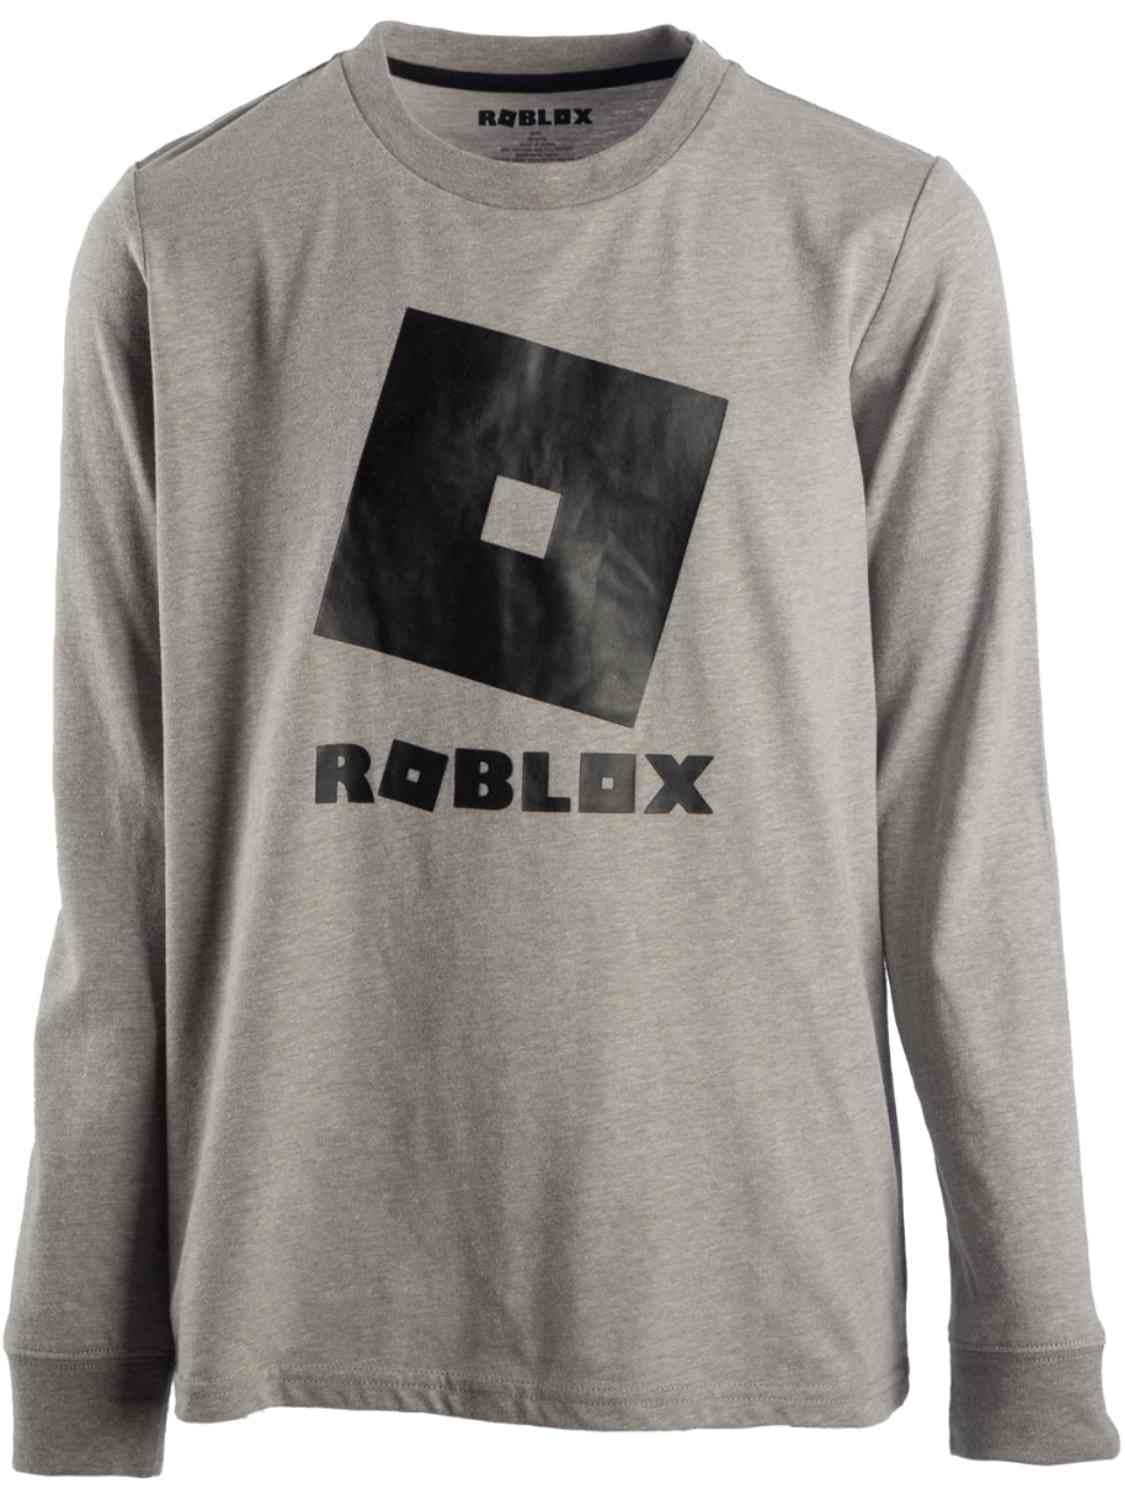 Boys Gray Black Roblox T Shirt Long Sleeve Tee Shirt Walmart Com Walmart Com - roblox string.len